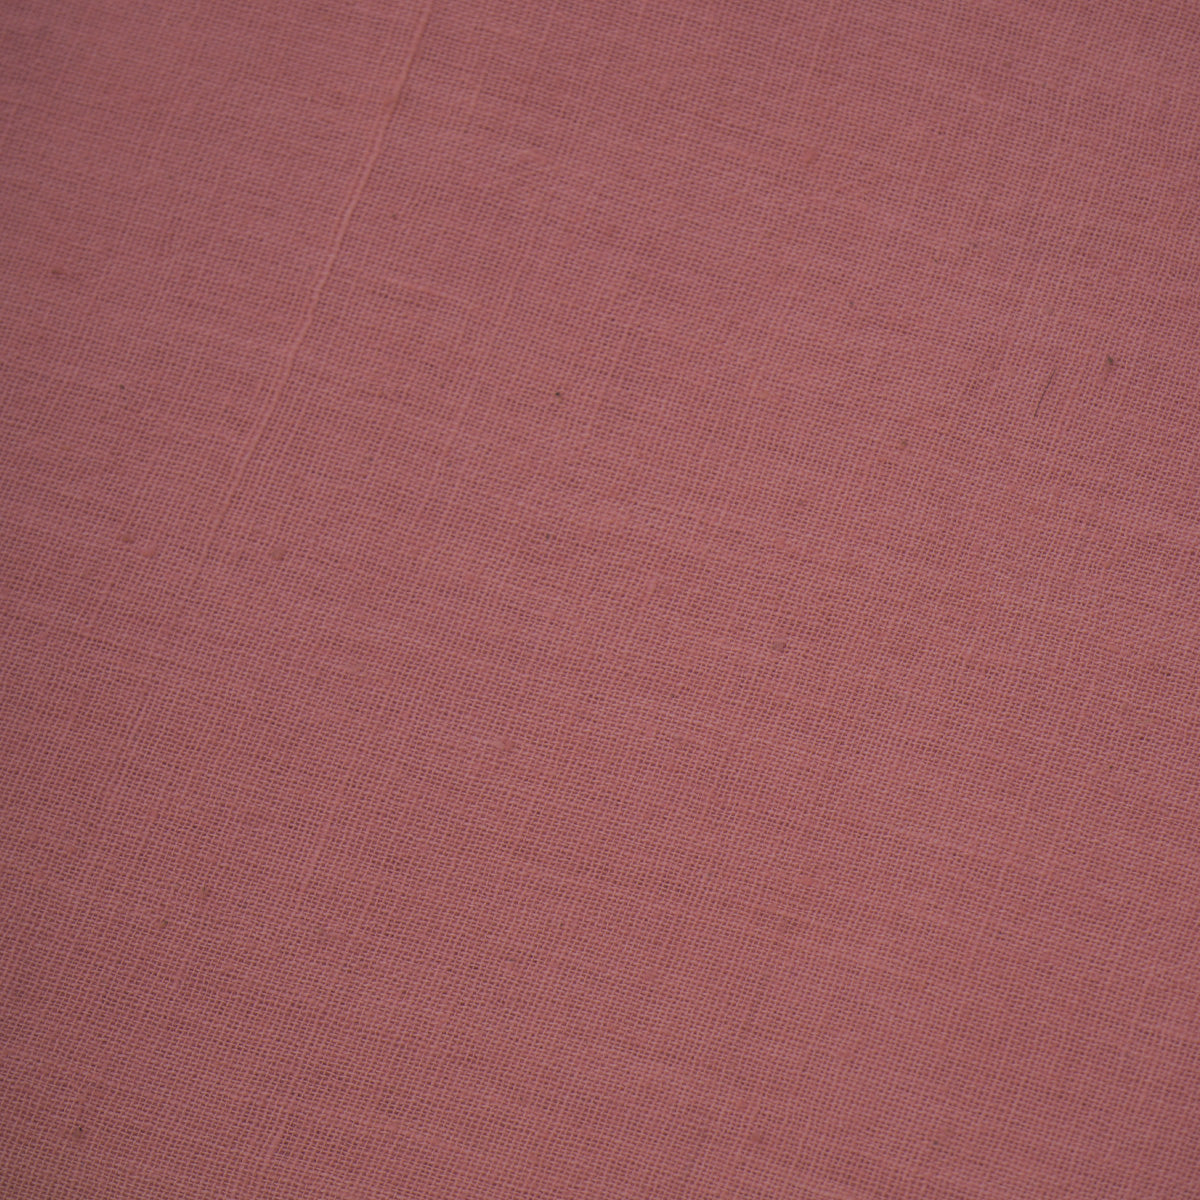 Onion Pink Cotton Fabric